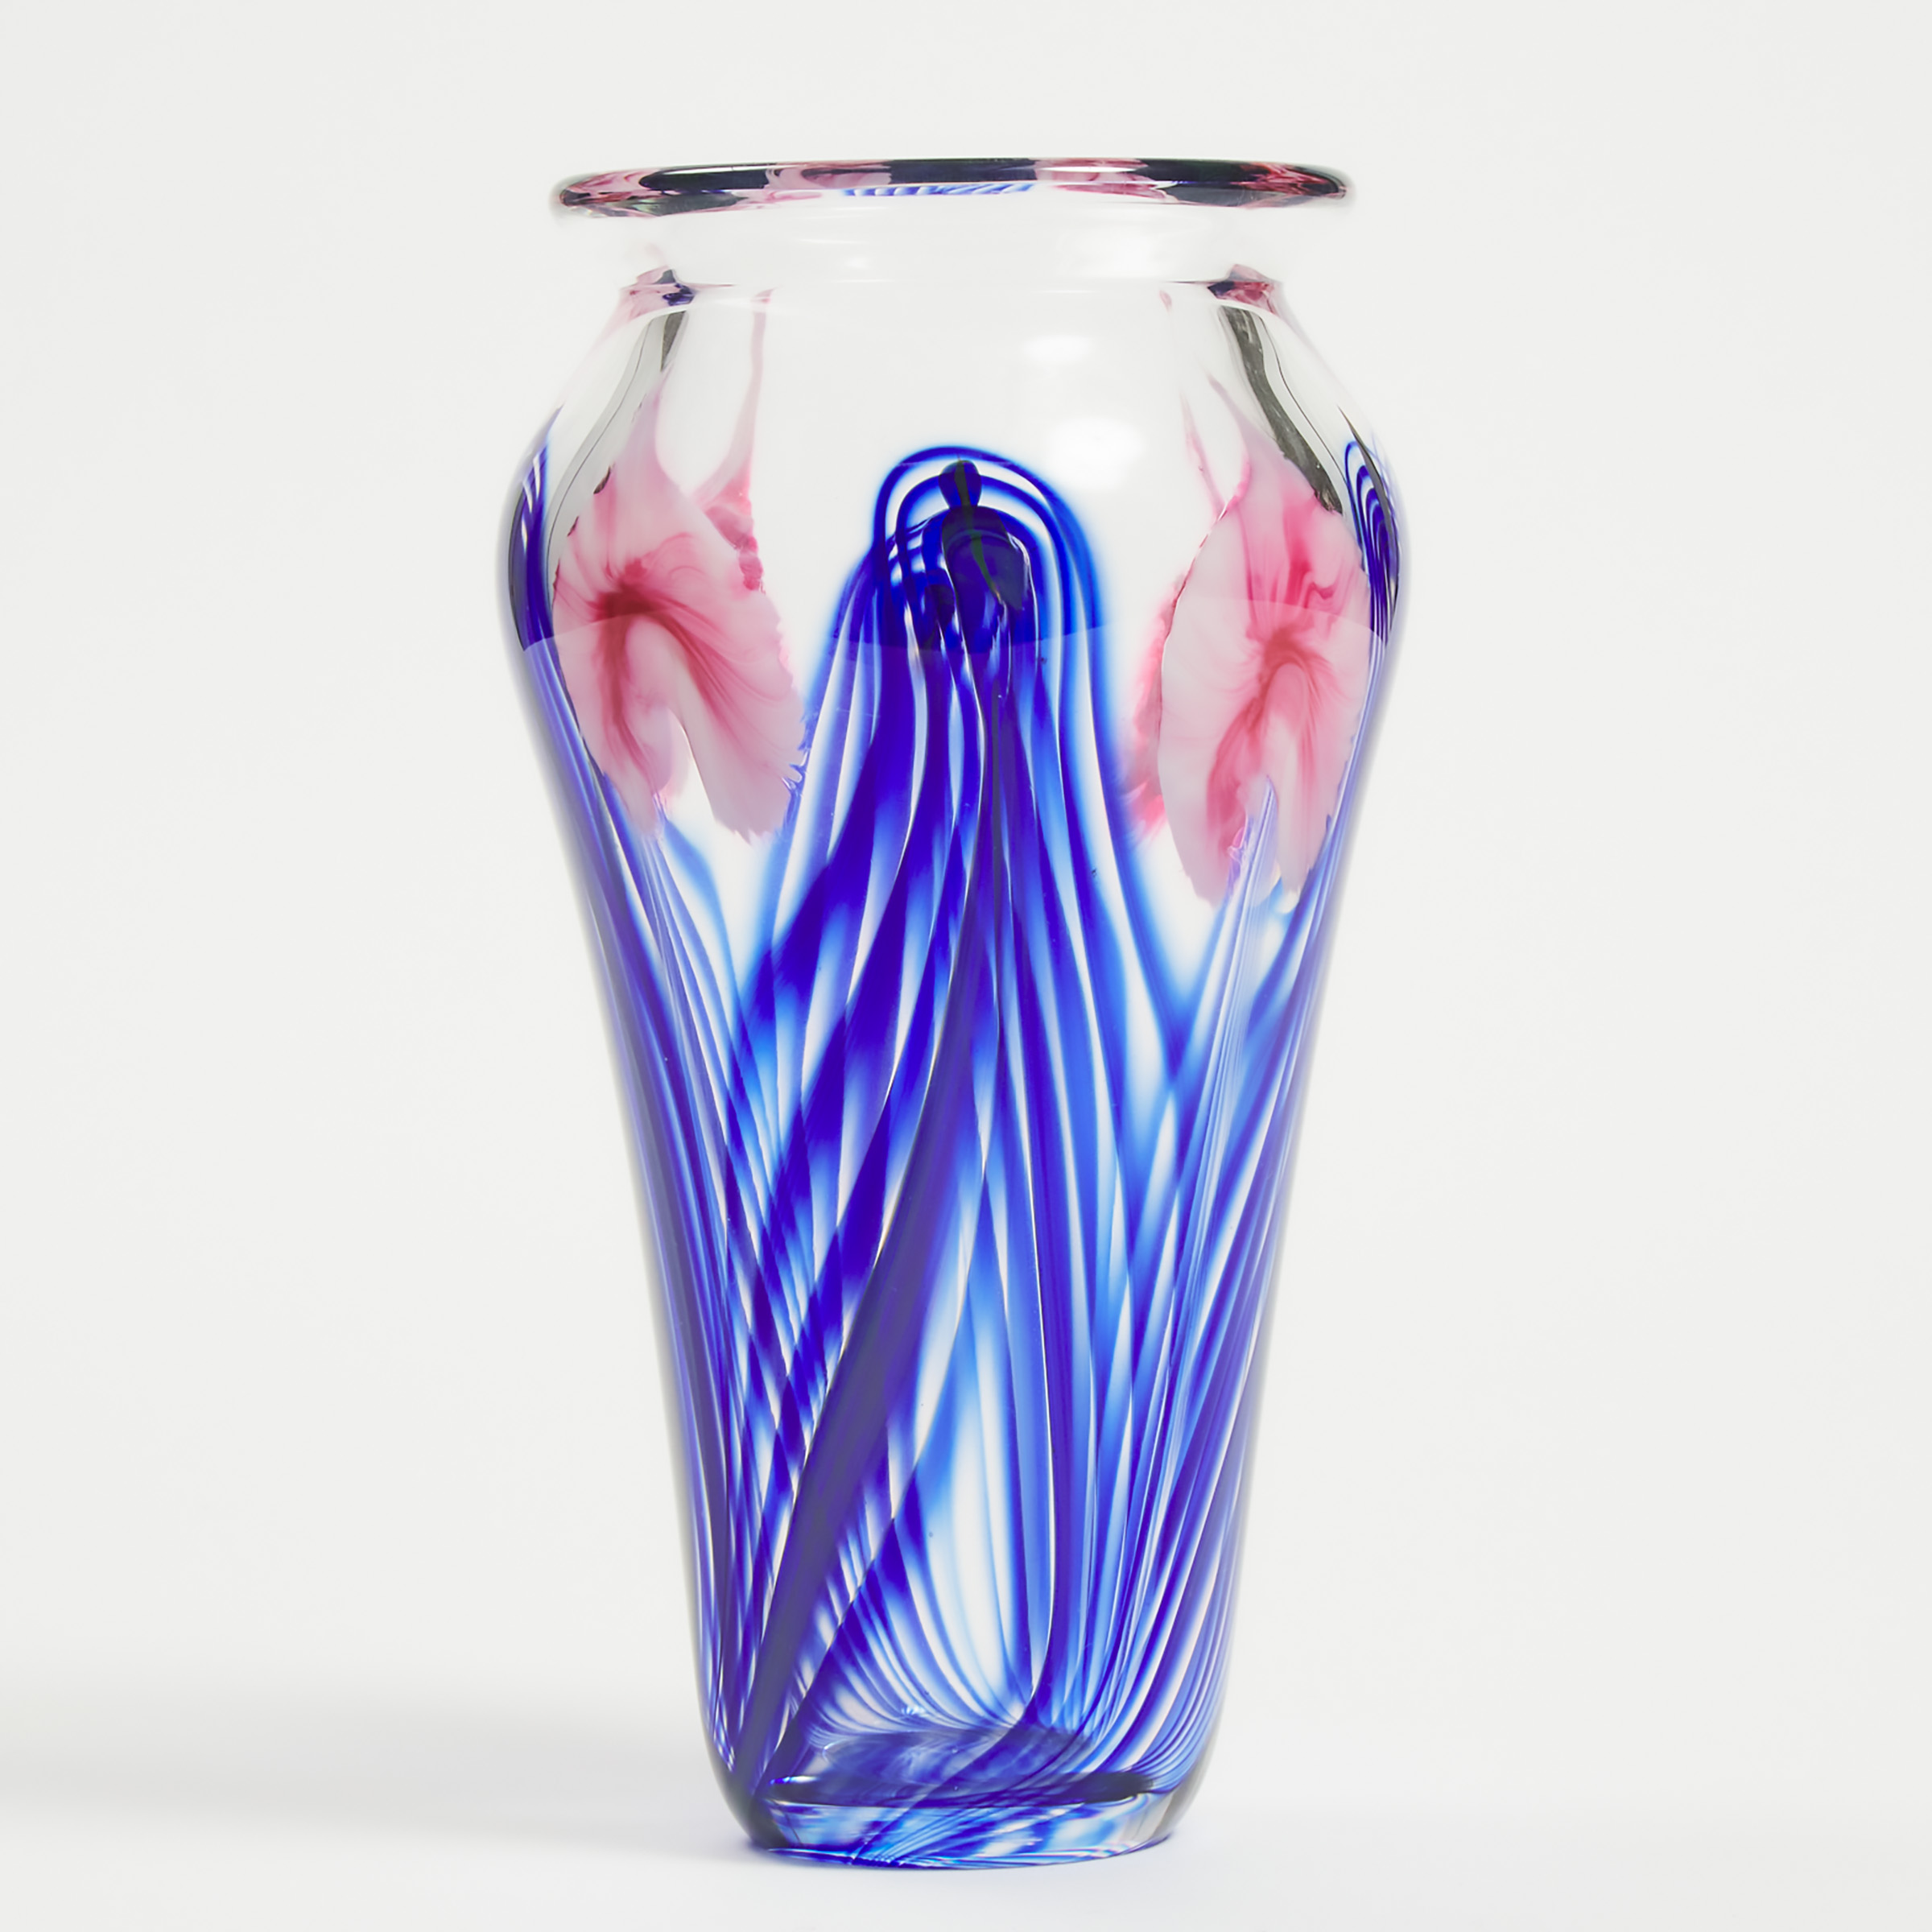 John Lotton (American, b.1964), Floral Glass Vase, 1995